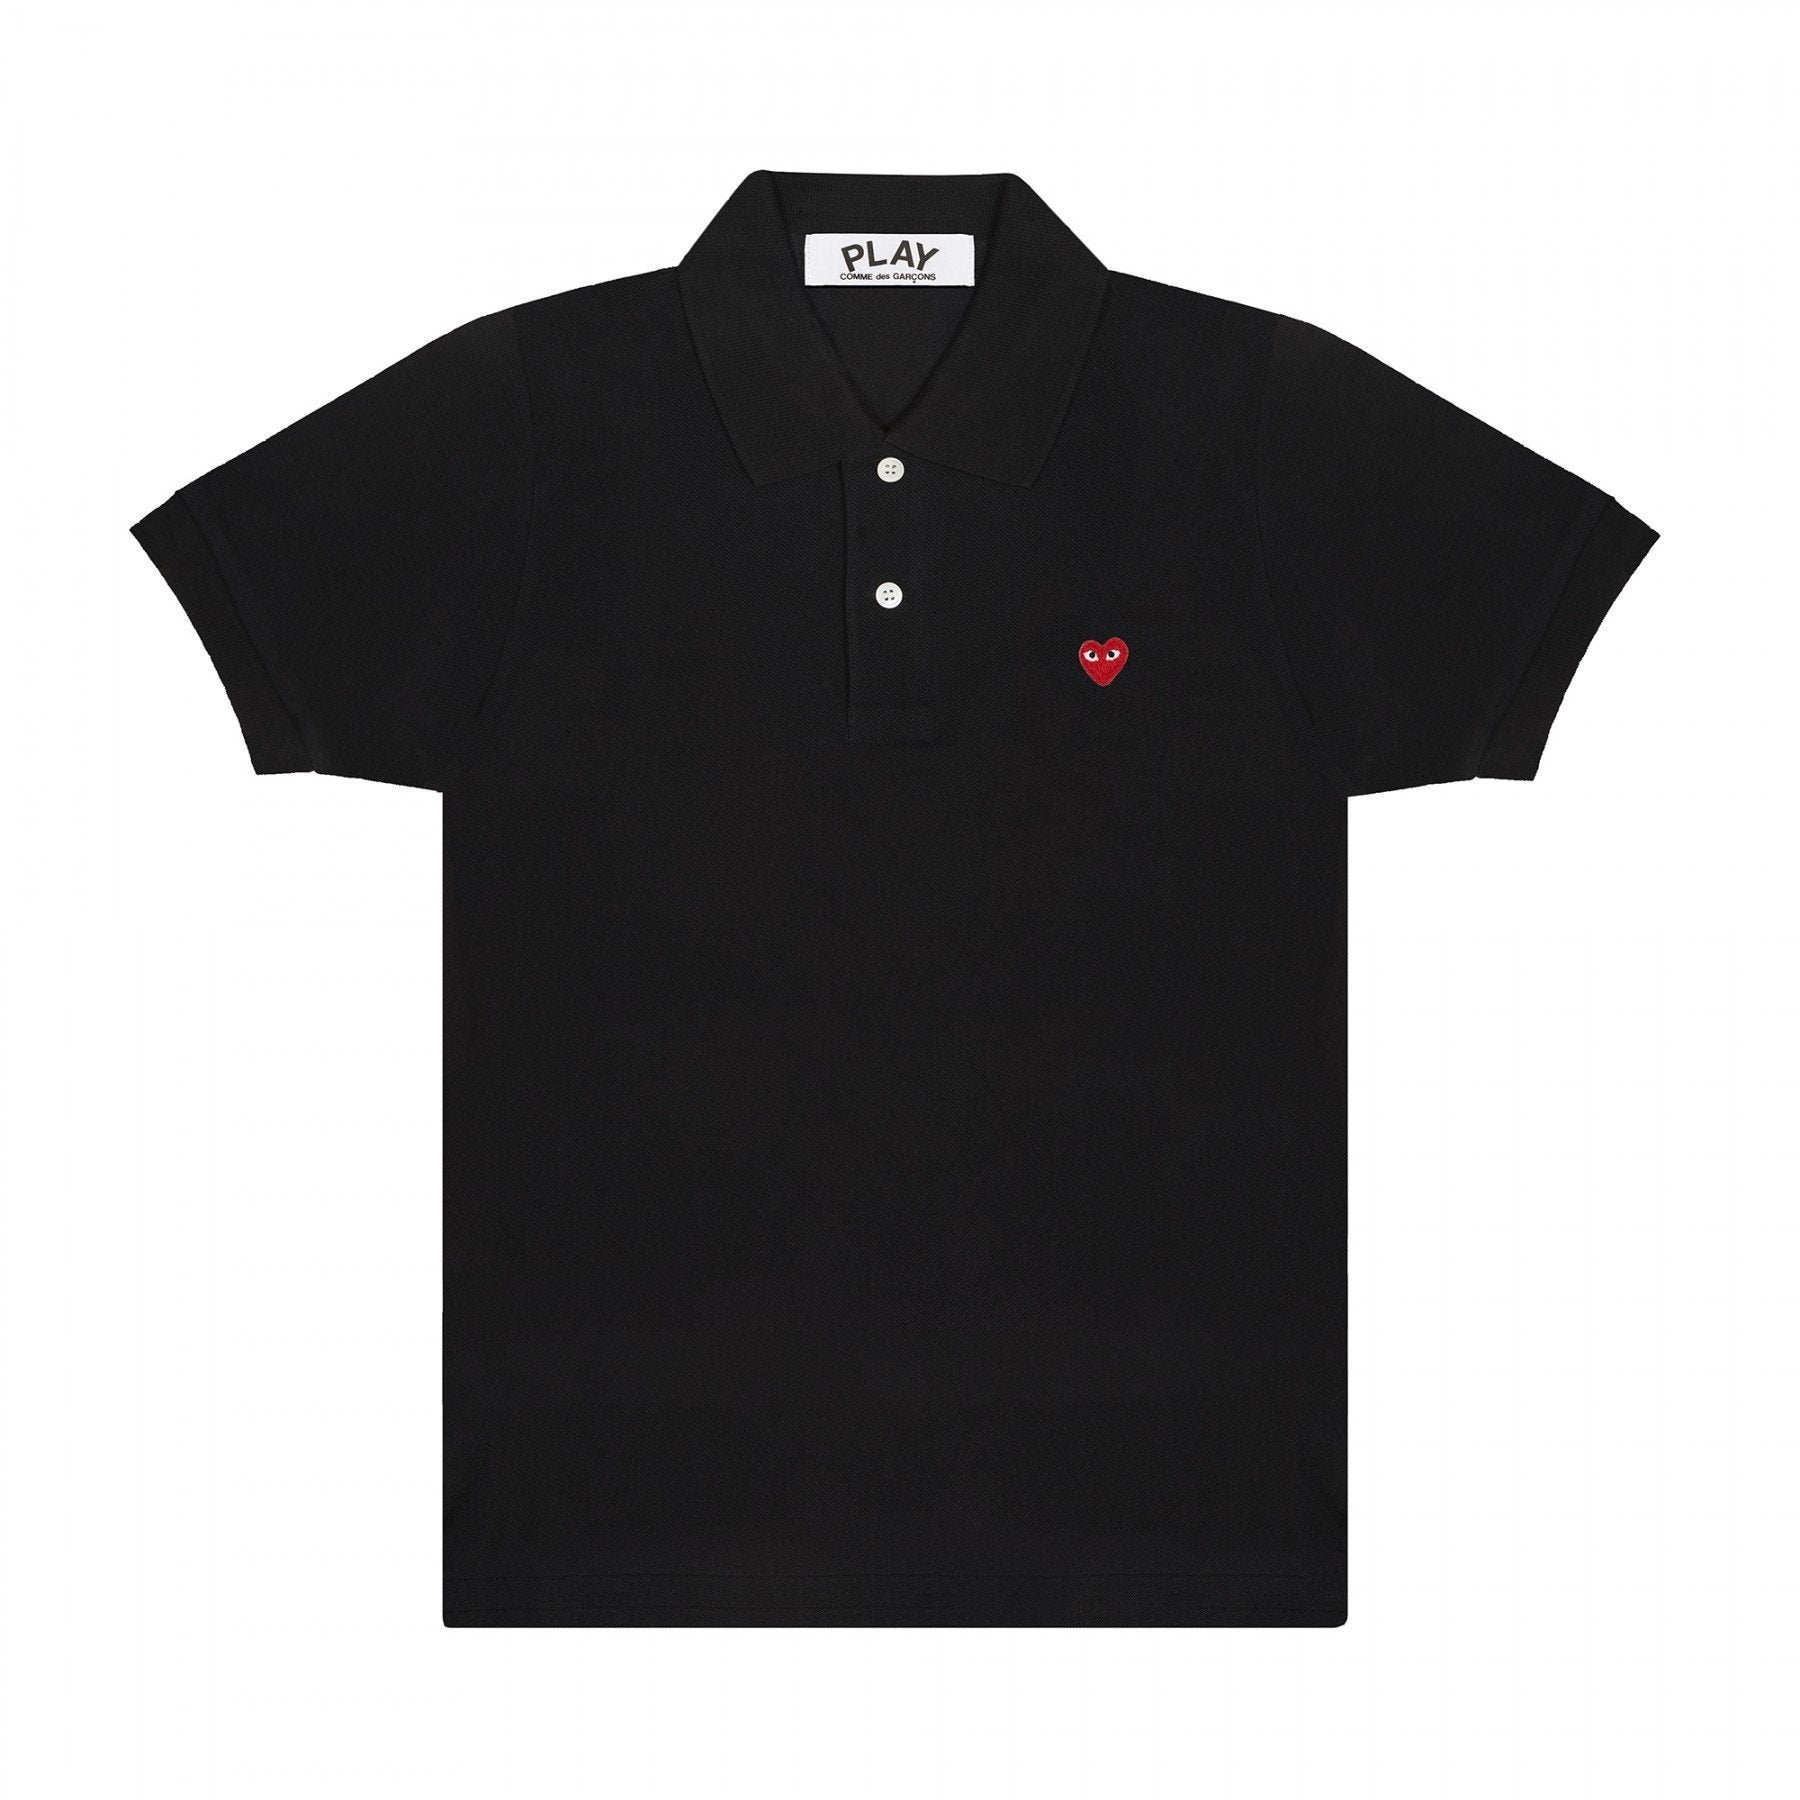 PLAY Polo Shirt Small Red Emblem (Black)